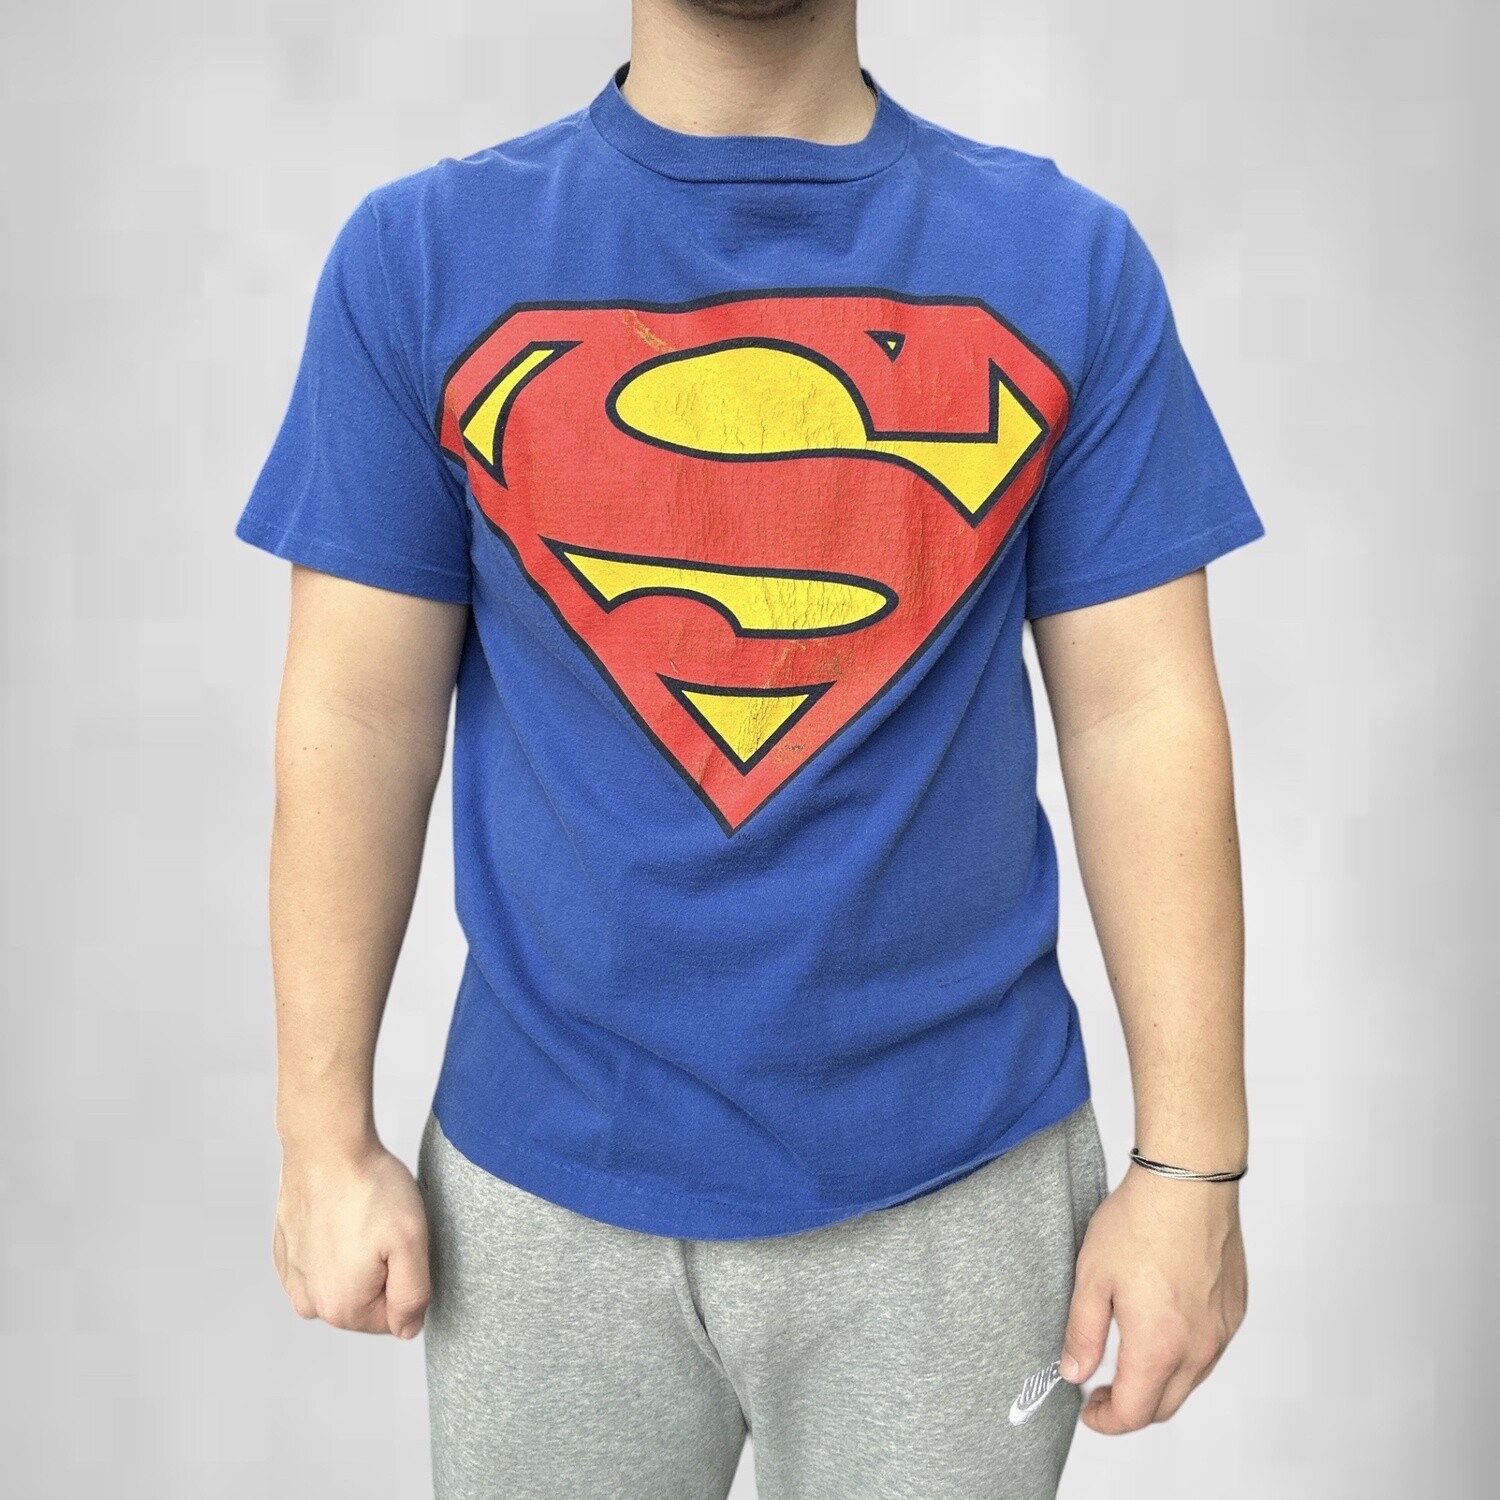 Vintage Superman Changes Tee, Size: XL, Color: Blue, Style: Television